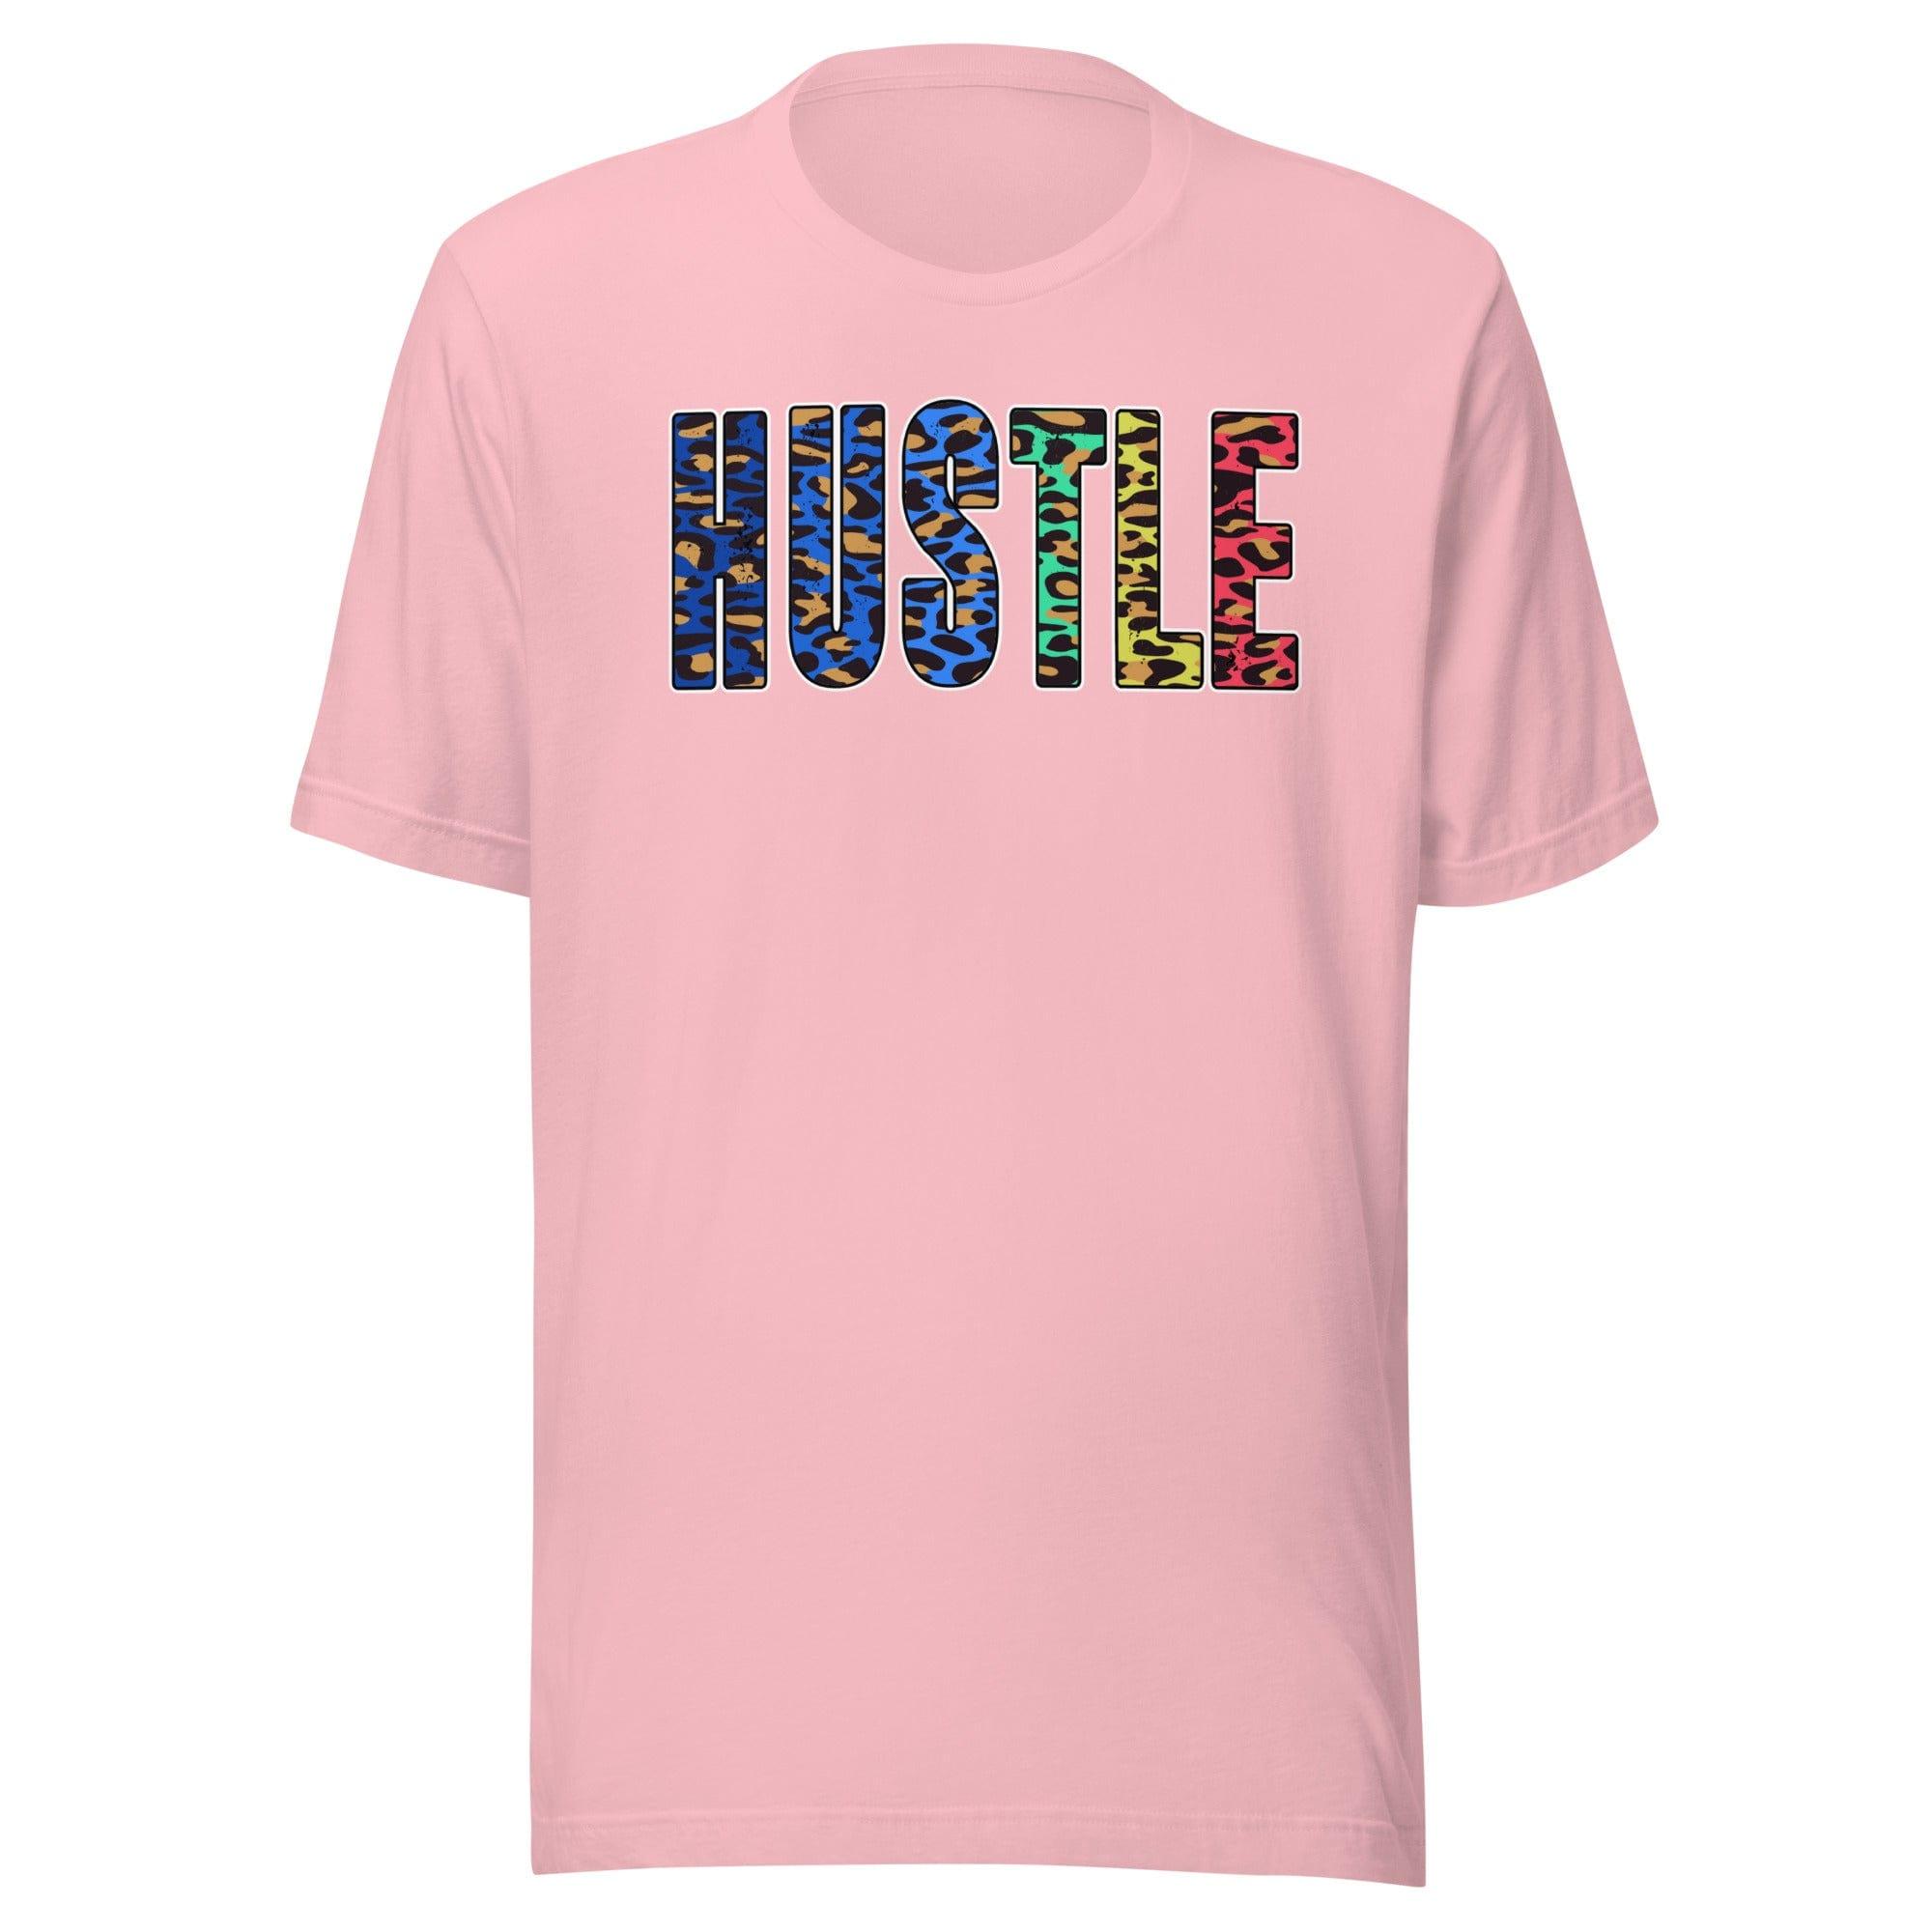 Urban T-shirt Urban Hustle Series in Leopard Print Short Sleeve Unisex Top - TopKoalaTee